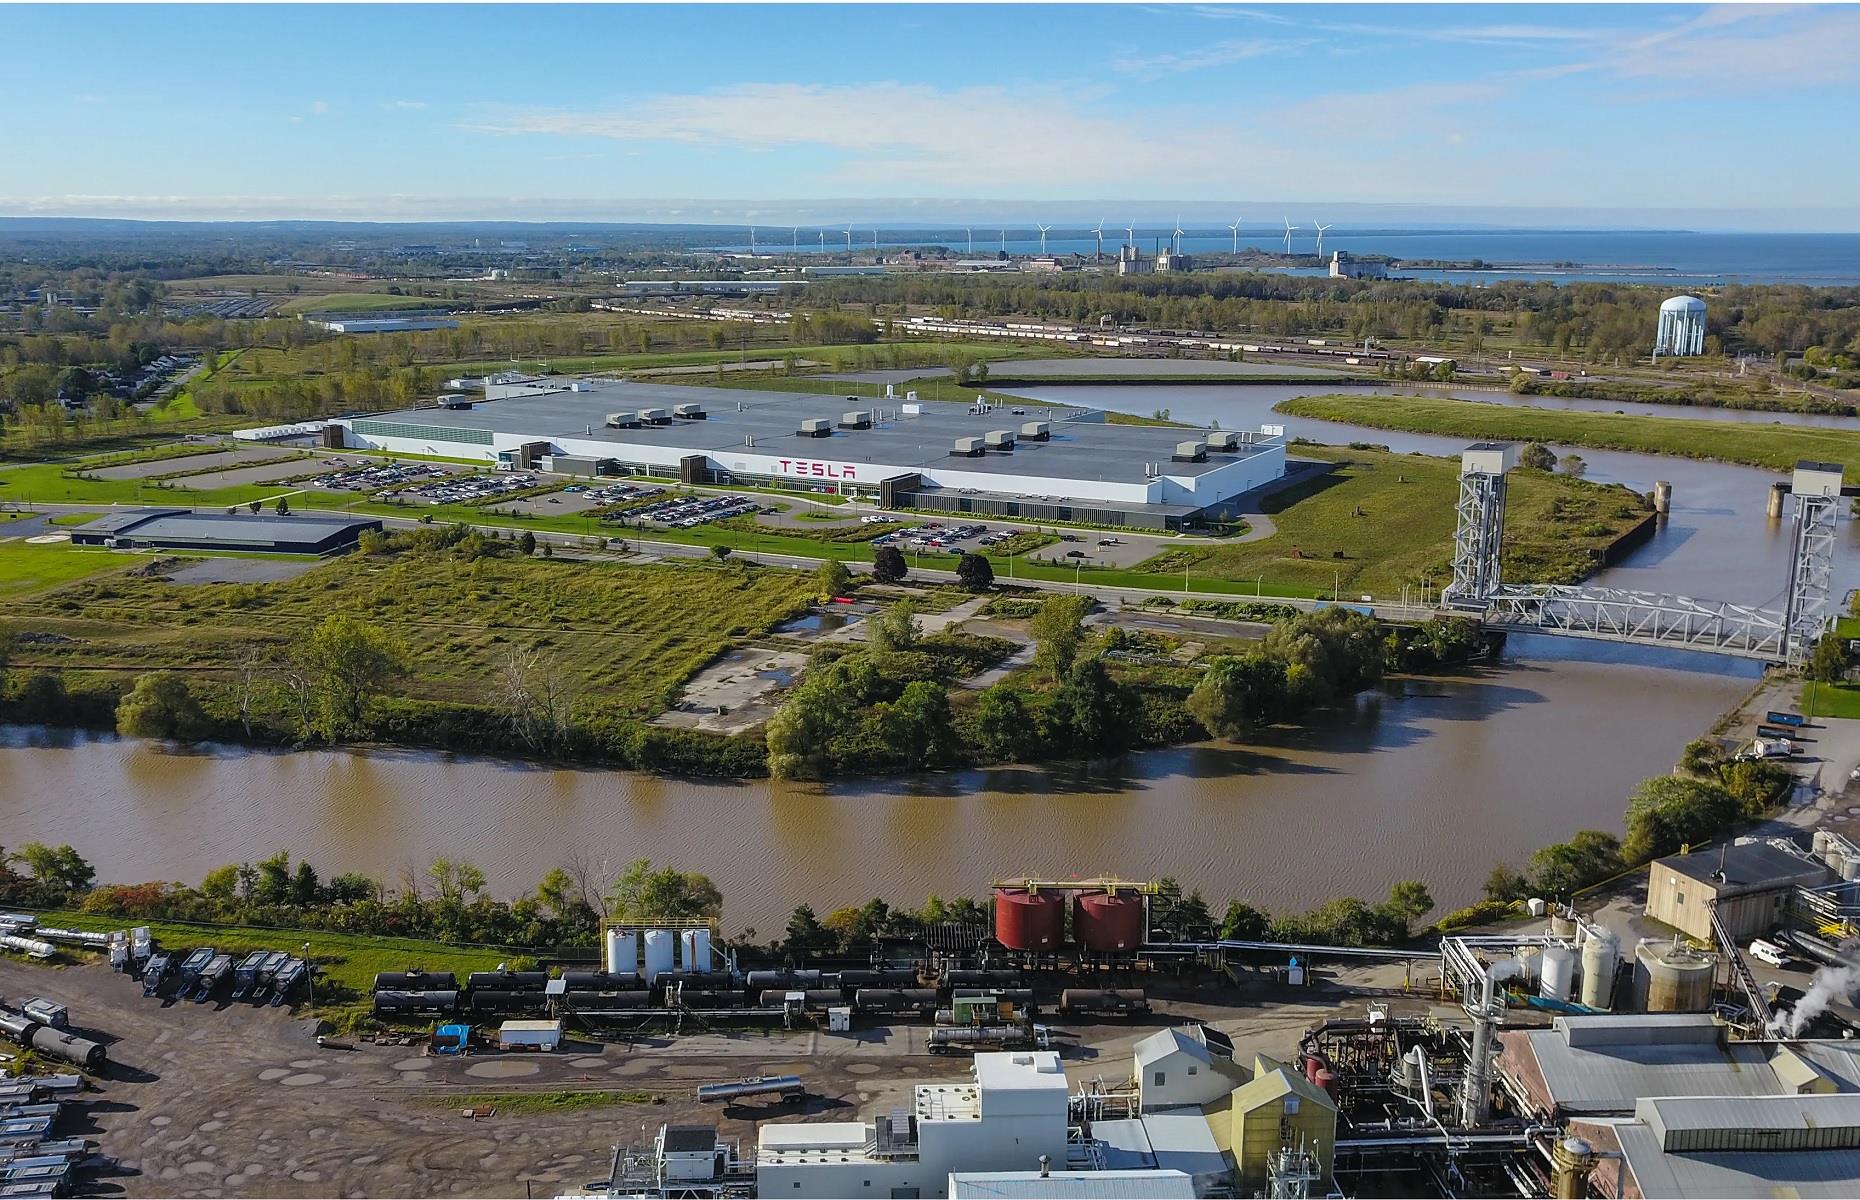 Tesla Gigafactory 2, USA: 1.2 million square feet (111,500 square metres)